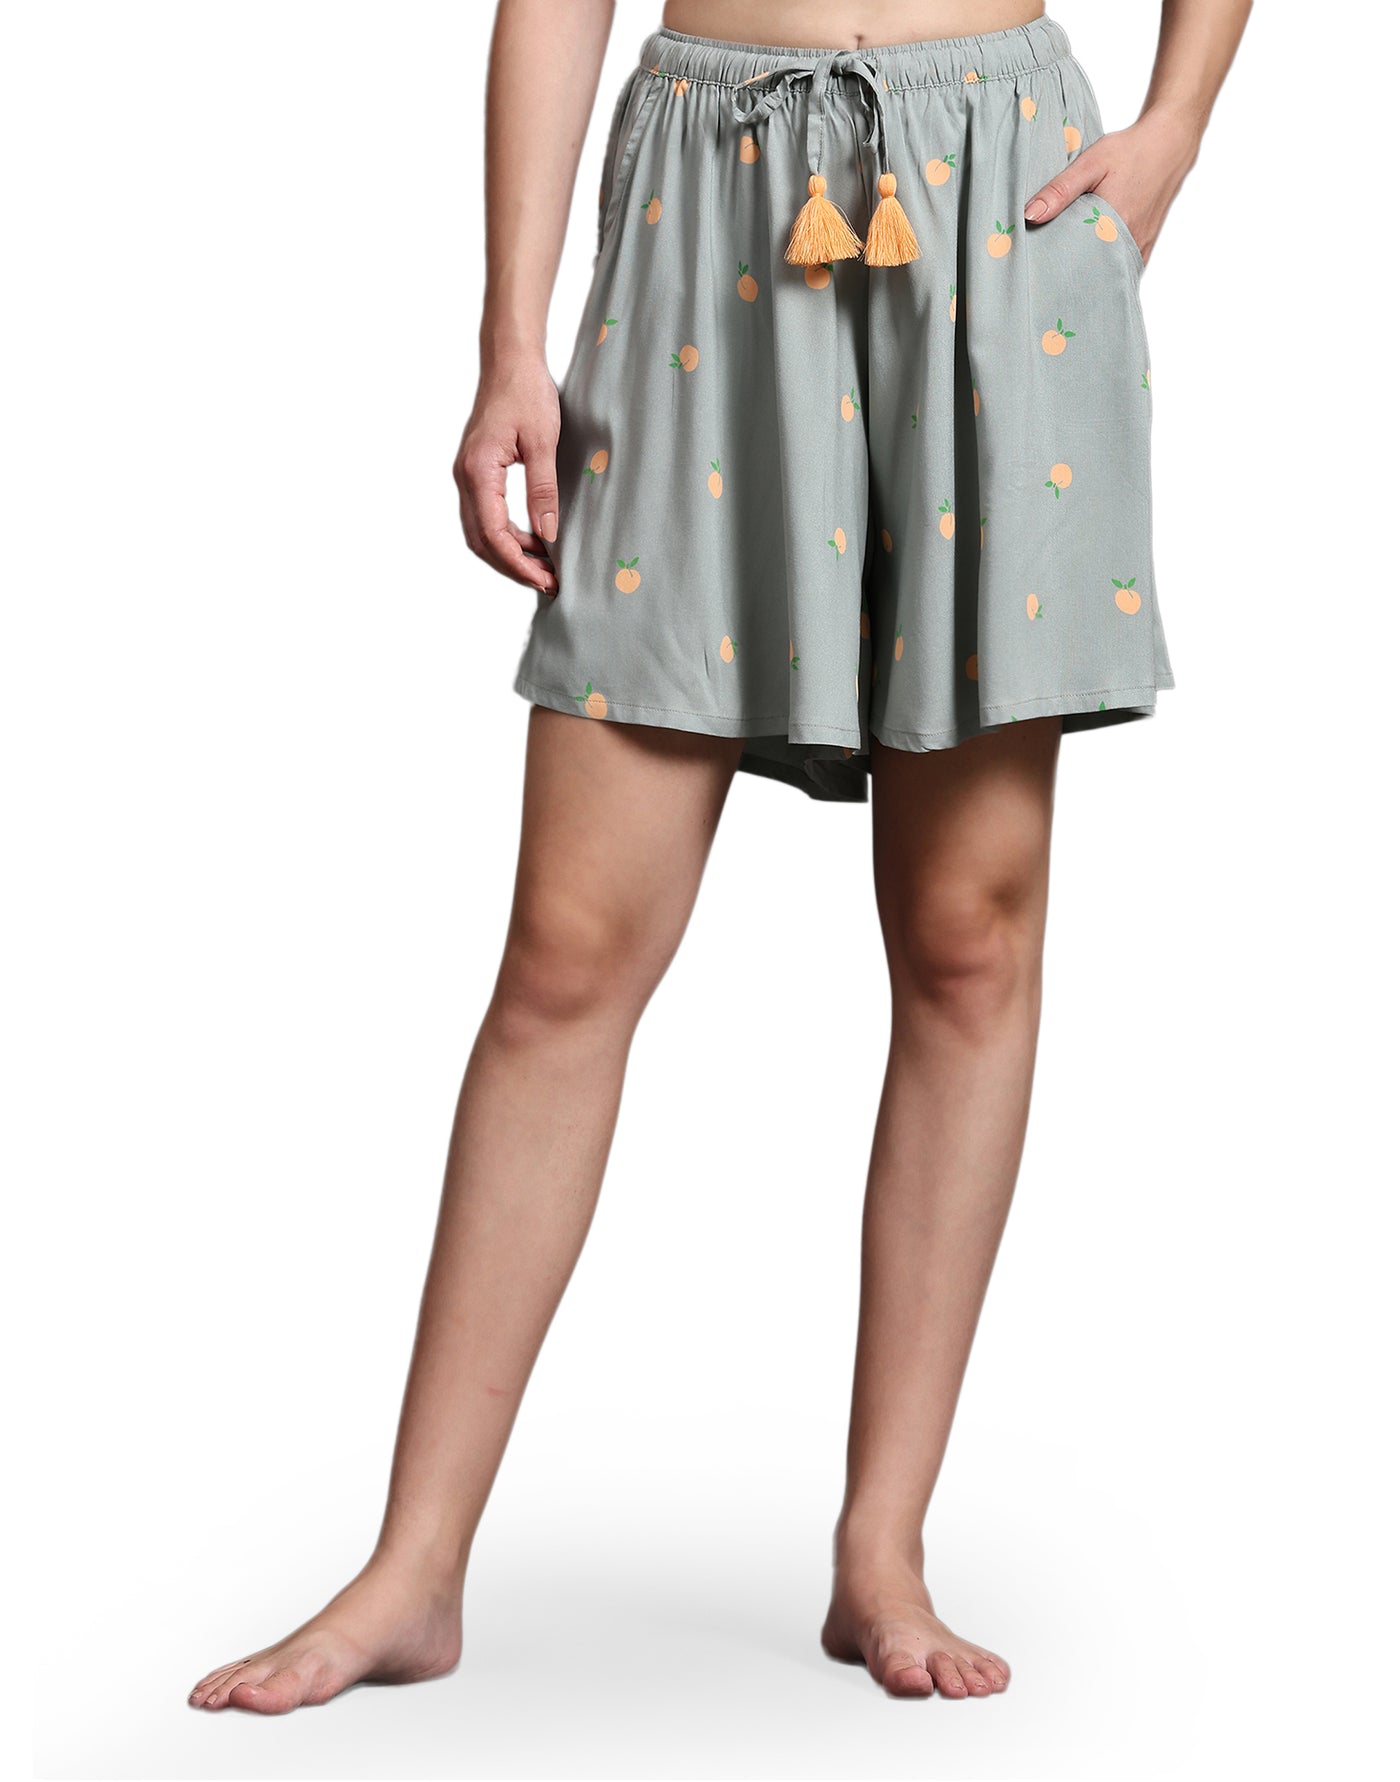 Culottes Shorts for Women-Grey Peach Art